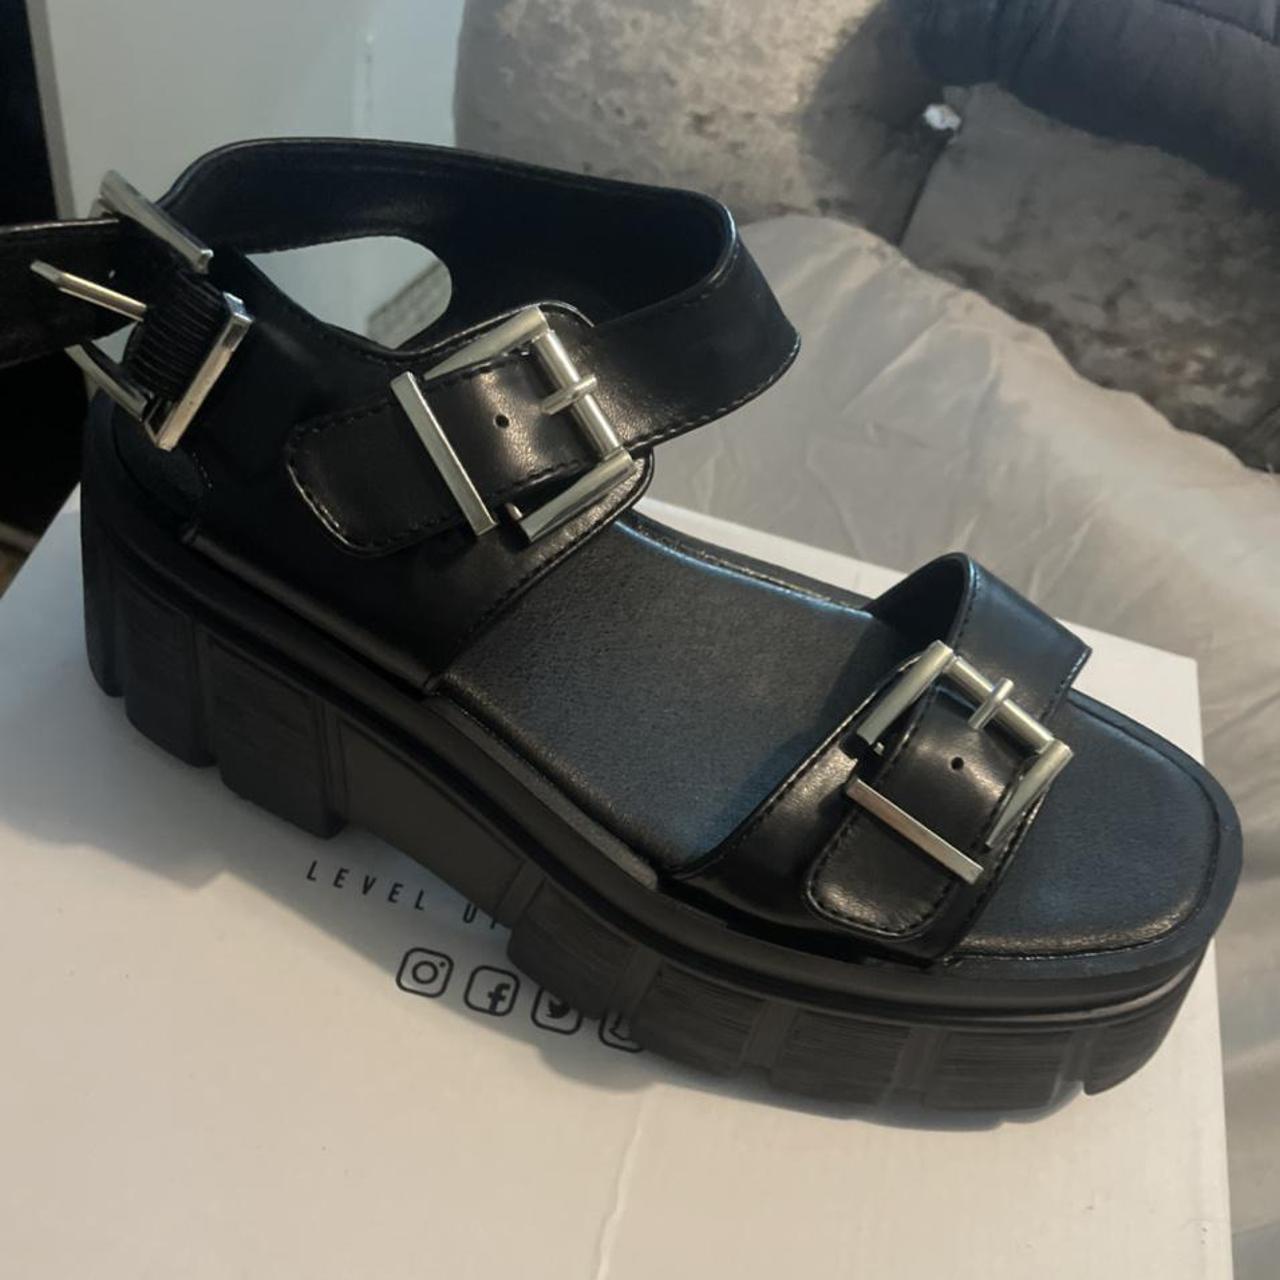 Size 5 platform sandals selling as I bought 2 by... - Depop